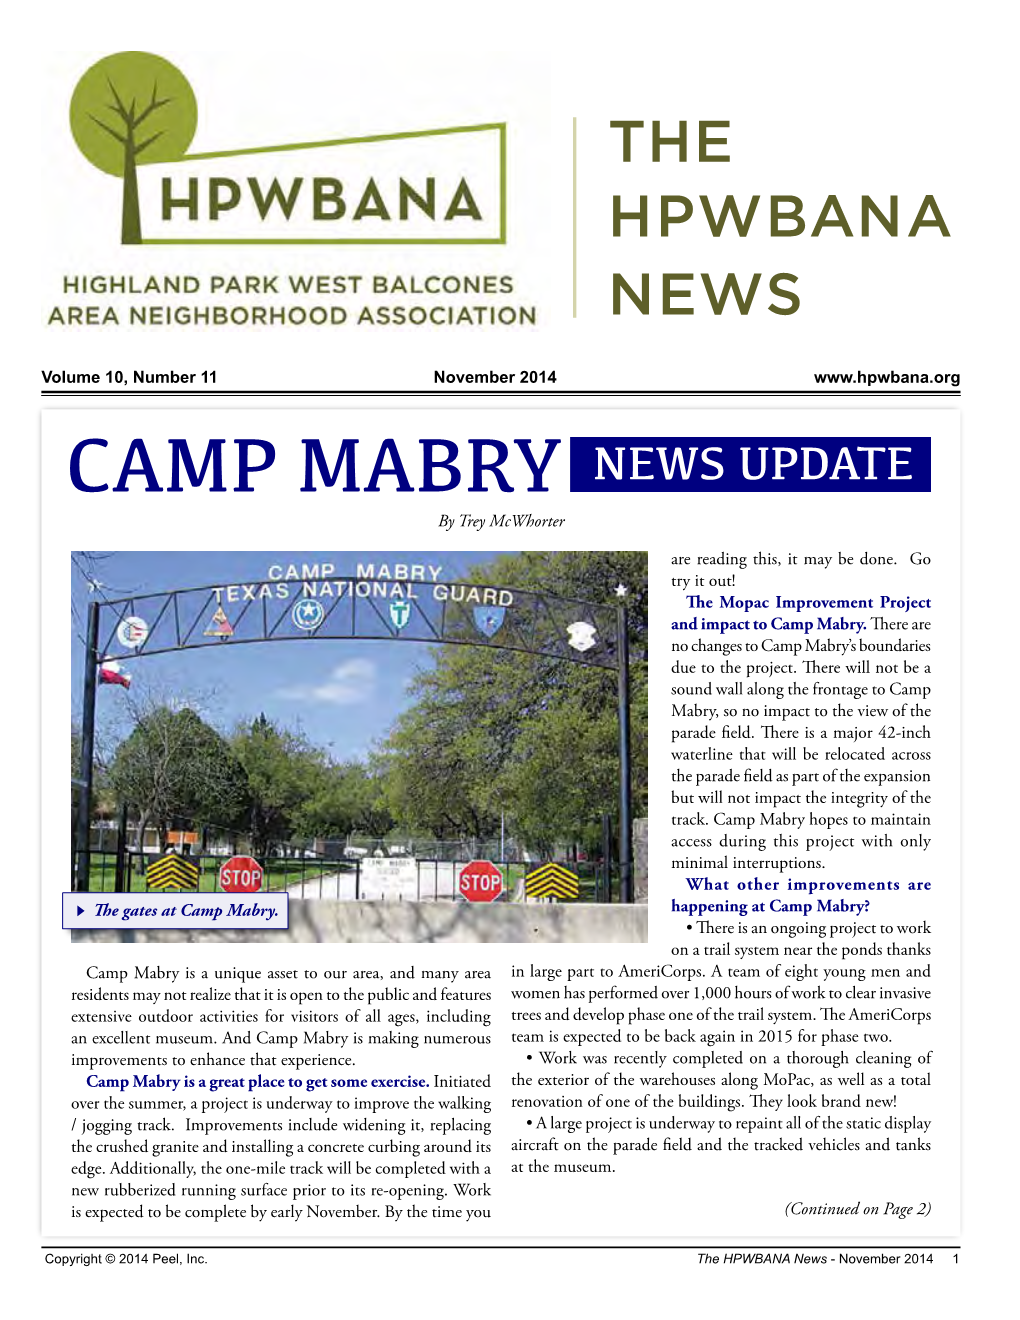 CAMP MABRY NEWS UPDATE by Trey Mcwhorter